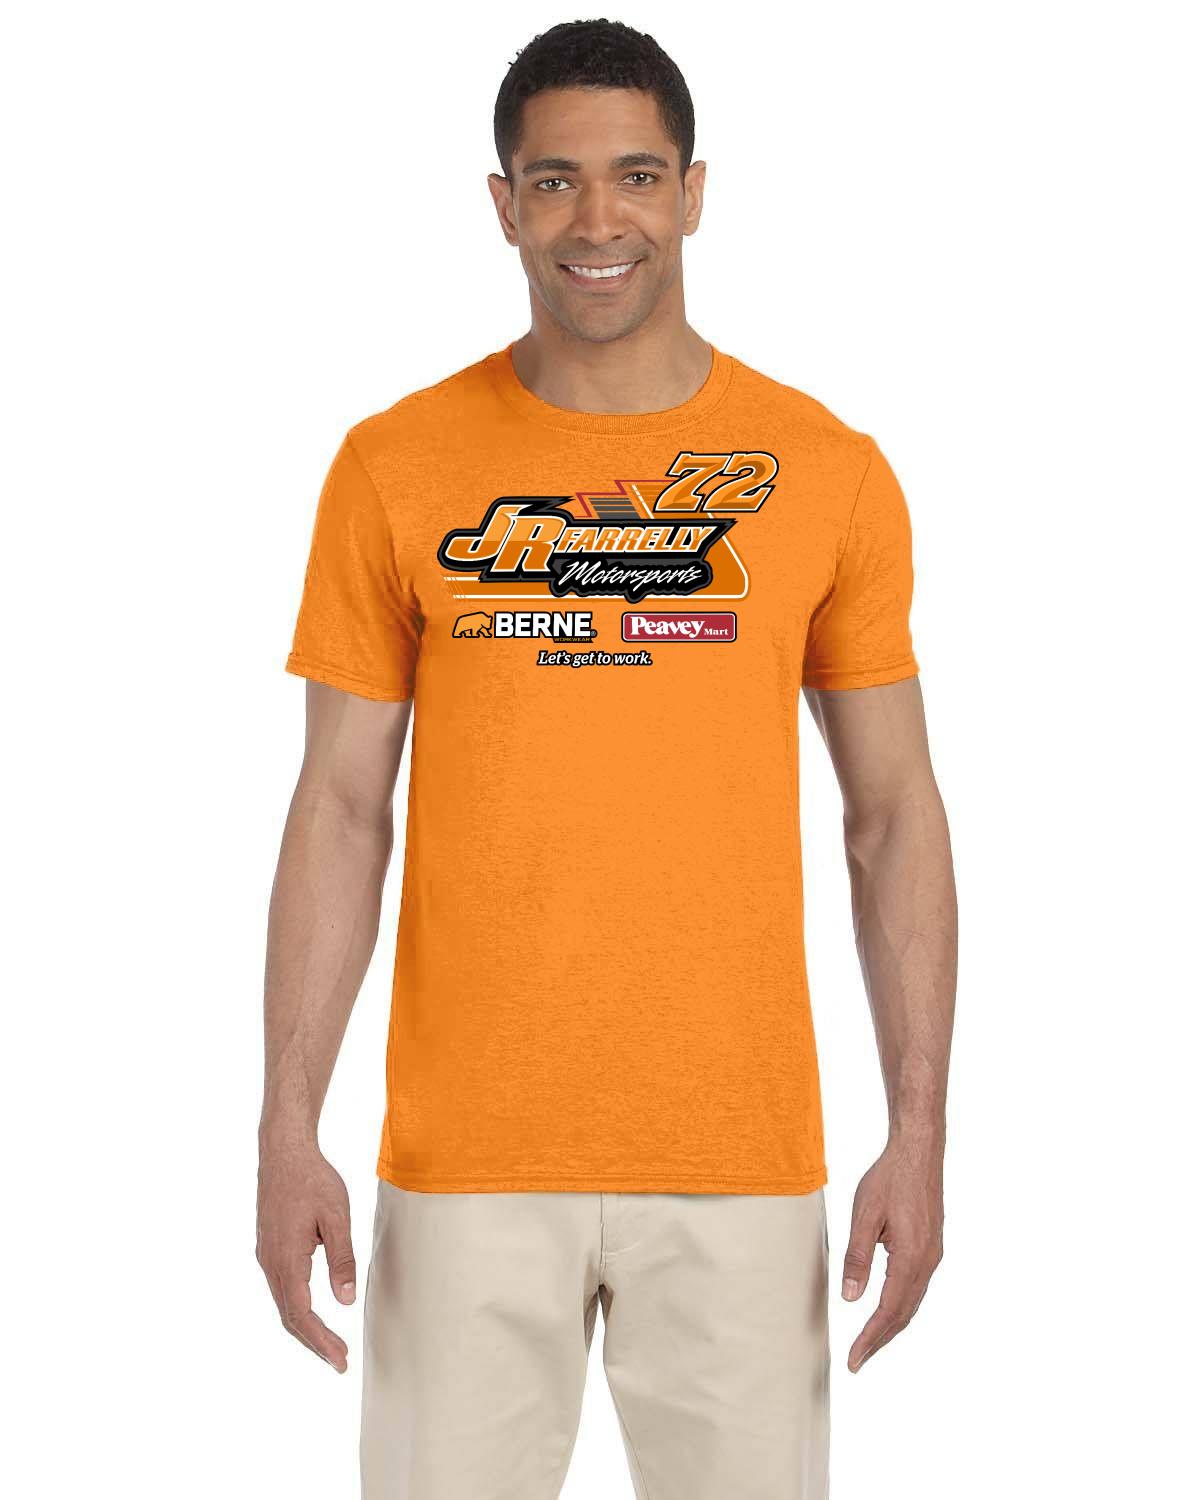 Jr. Farrelly Motorsports / BERNE - Peavey Men's Softstyle T-shirt